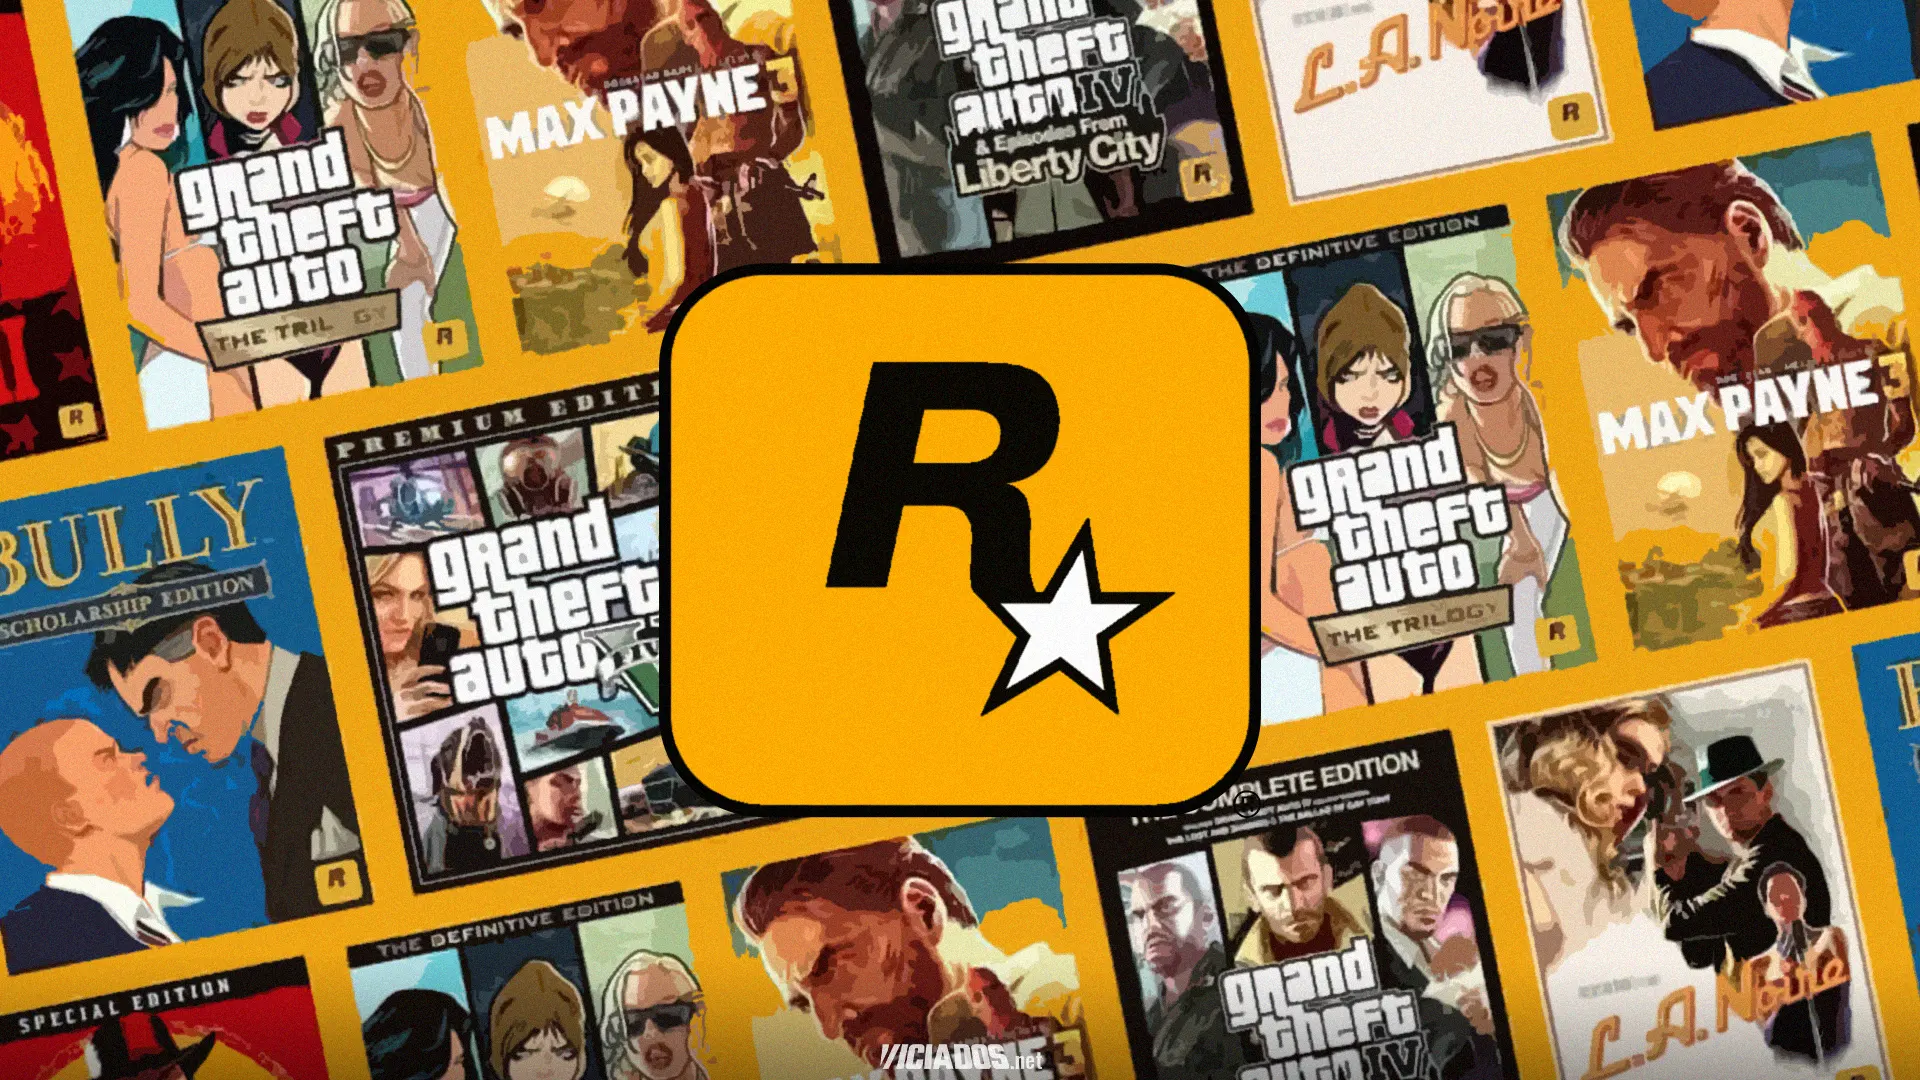 Dona da Rockstar Games passa por problemas financeiros e vai despedir funcionários 2023 Viciados